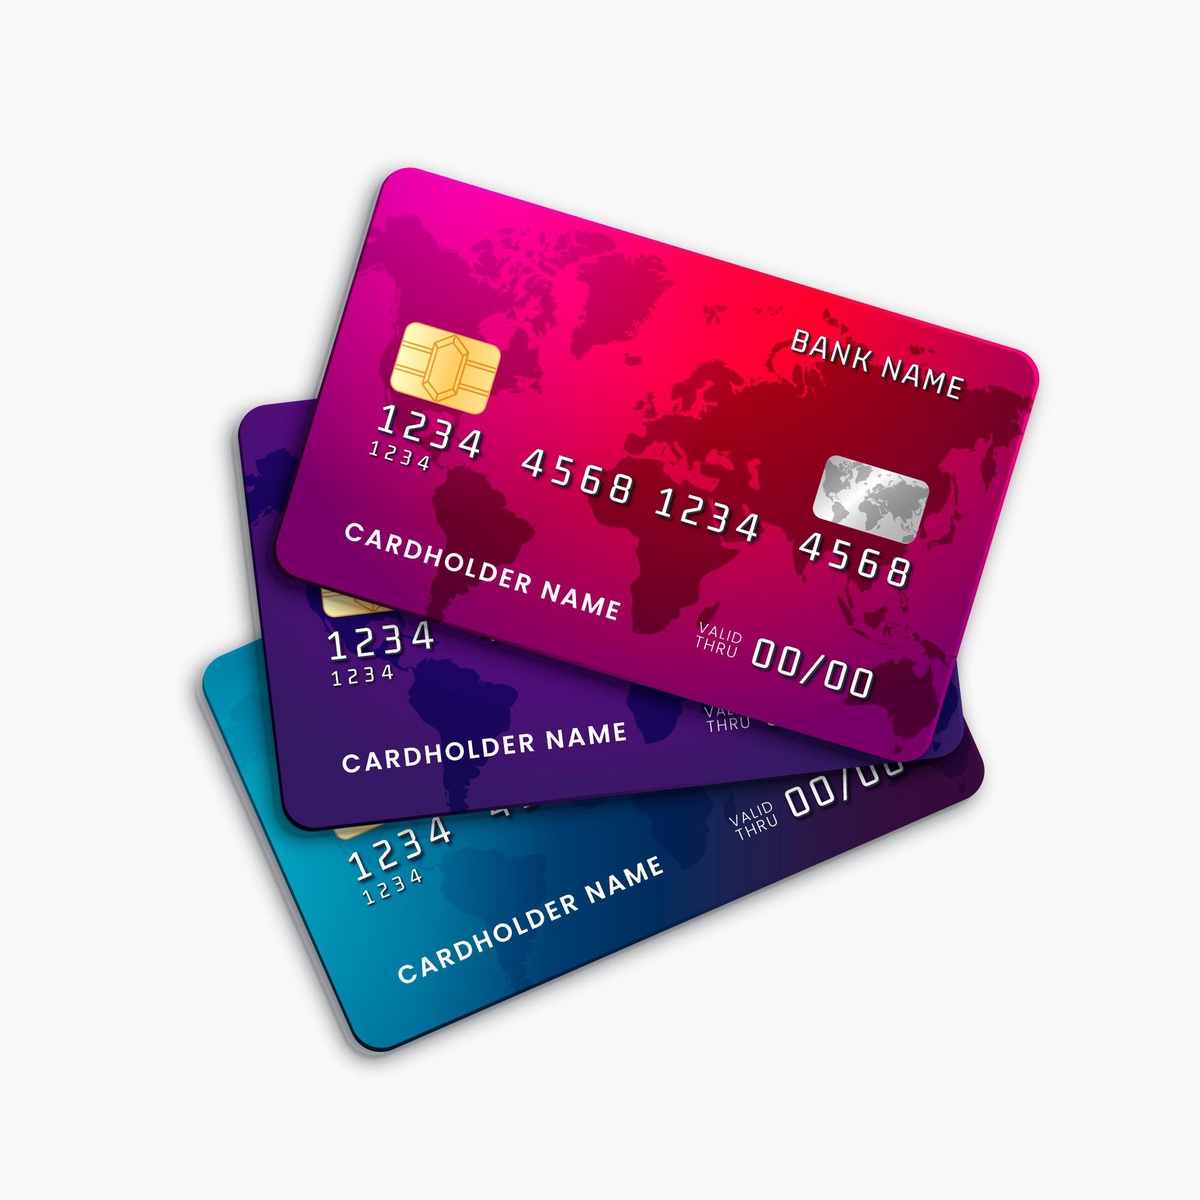 : Revolutionizing Credit Card Services